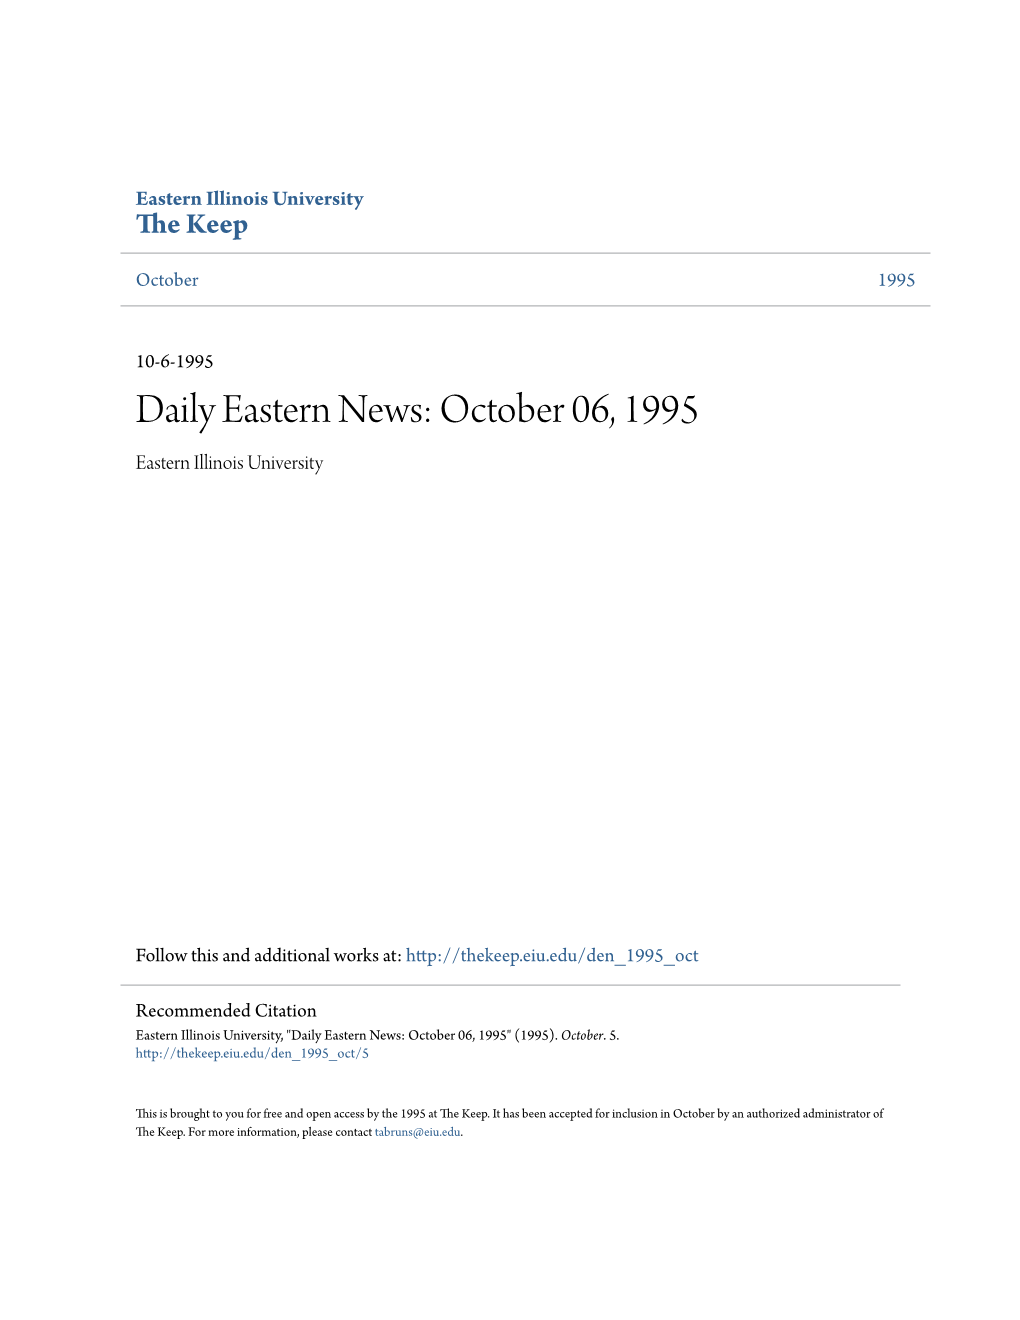 Daily Eastern News: October 06, 1995 Eastern Illinois University